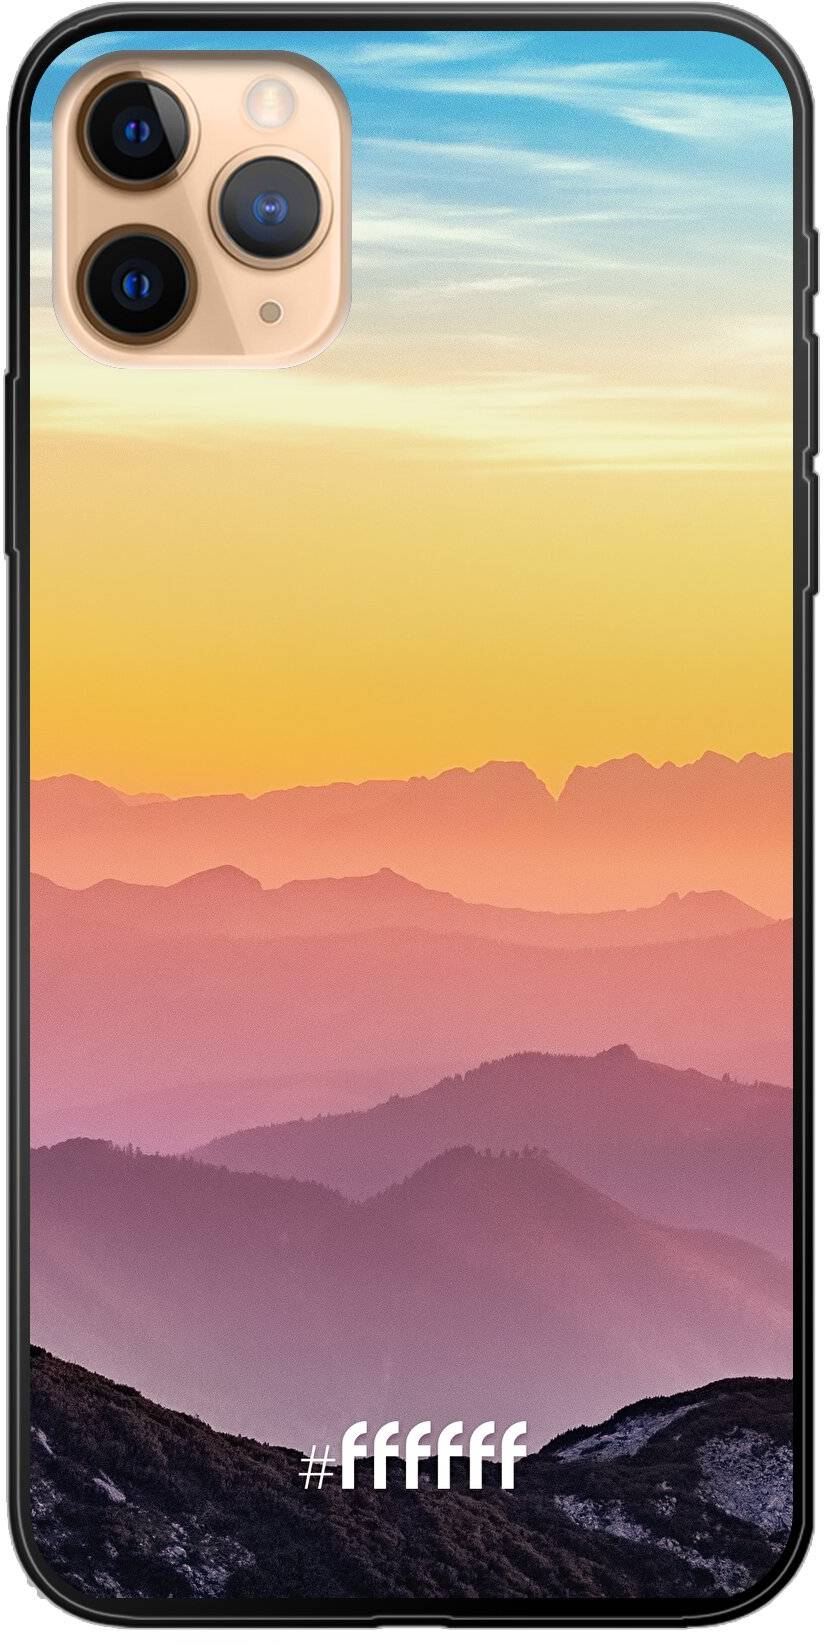 Golden Hour iPhone 11 Pro Max